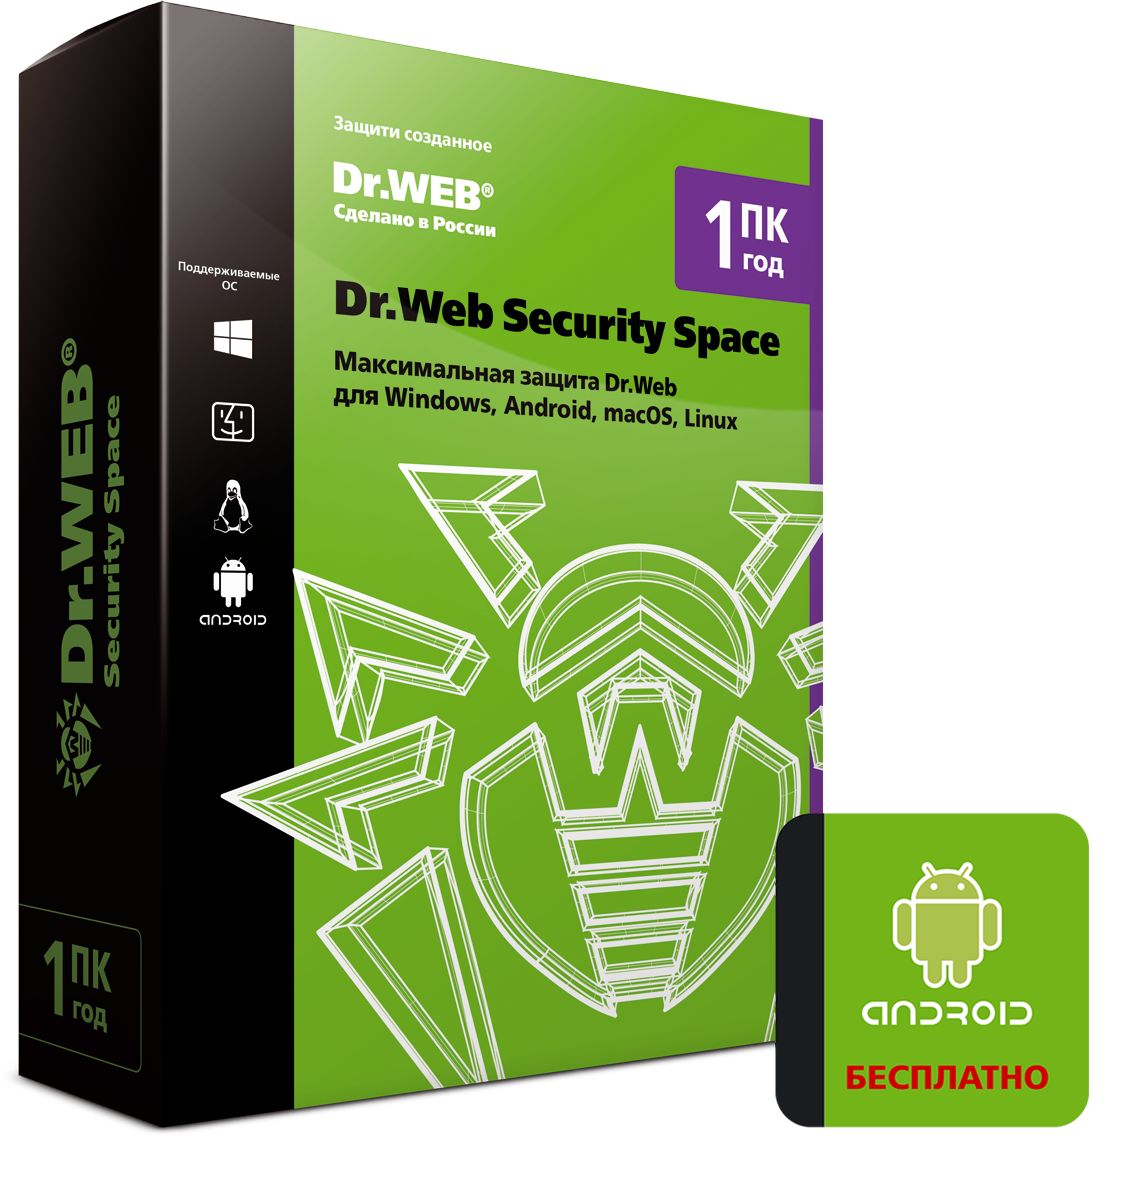 Антивирус Dr.Web Security Space на 1 год на 1 ПК [BHW-B-12M-1-A3] (Box) антивирус drweb security space продление на 1 год на 1 пк [lhw bk 12m 1 b3] электронный ключ